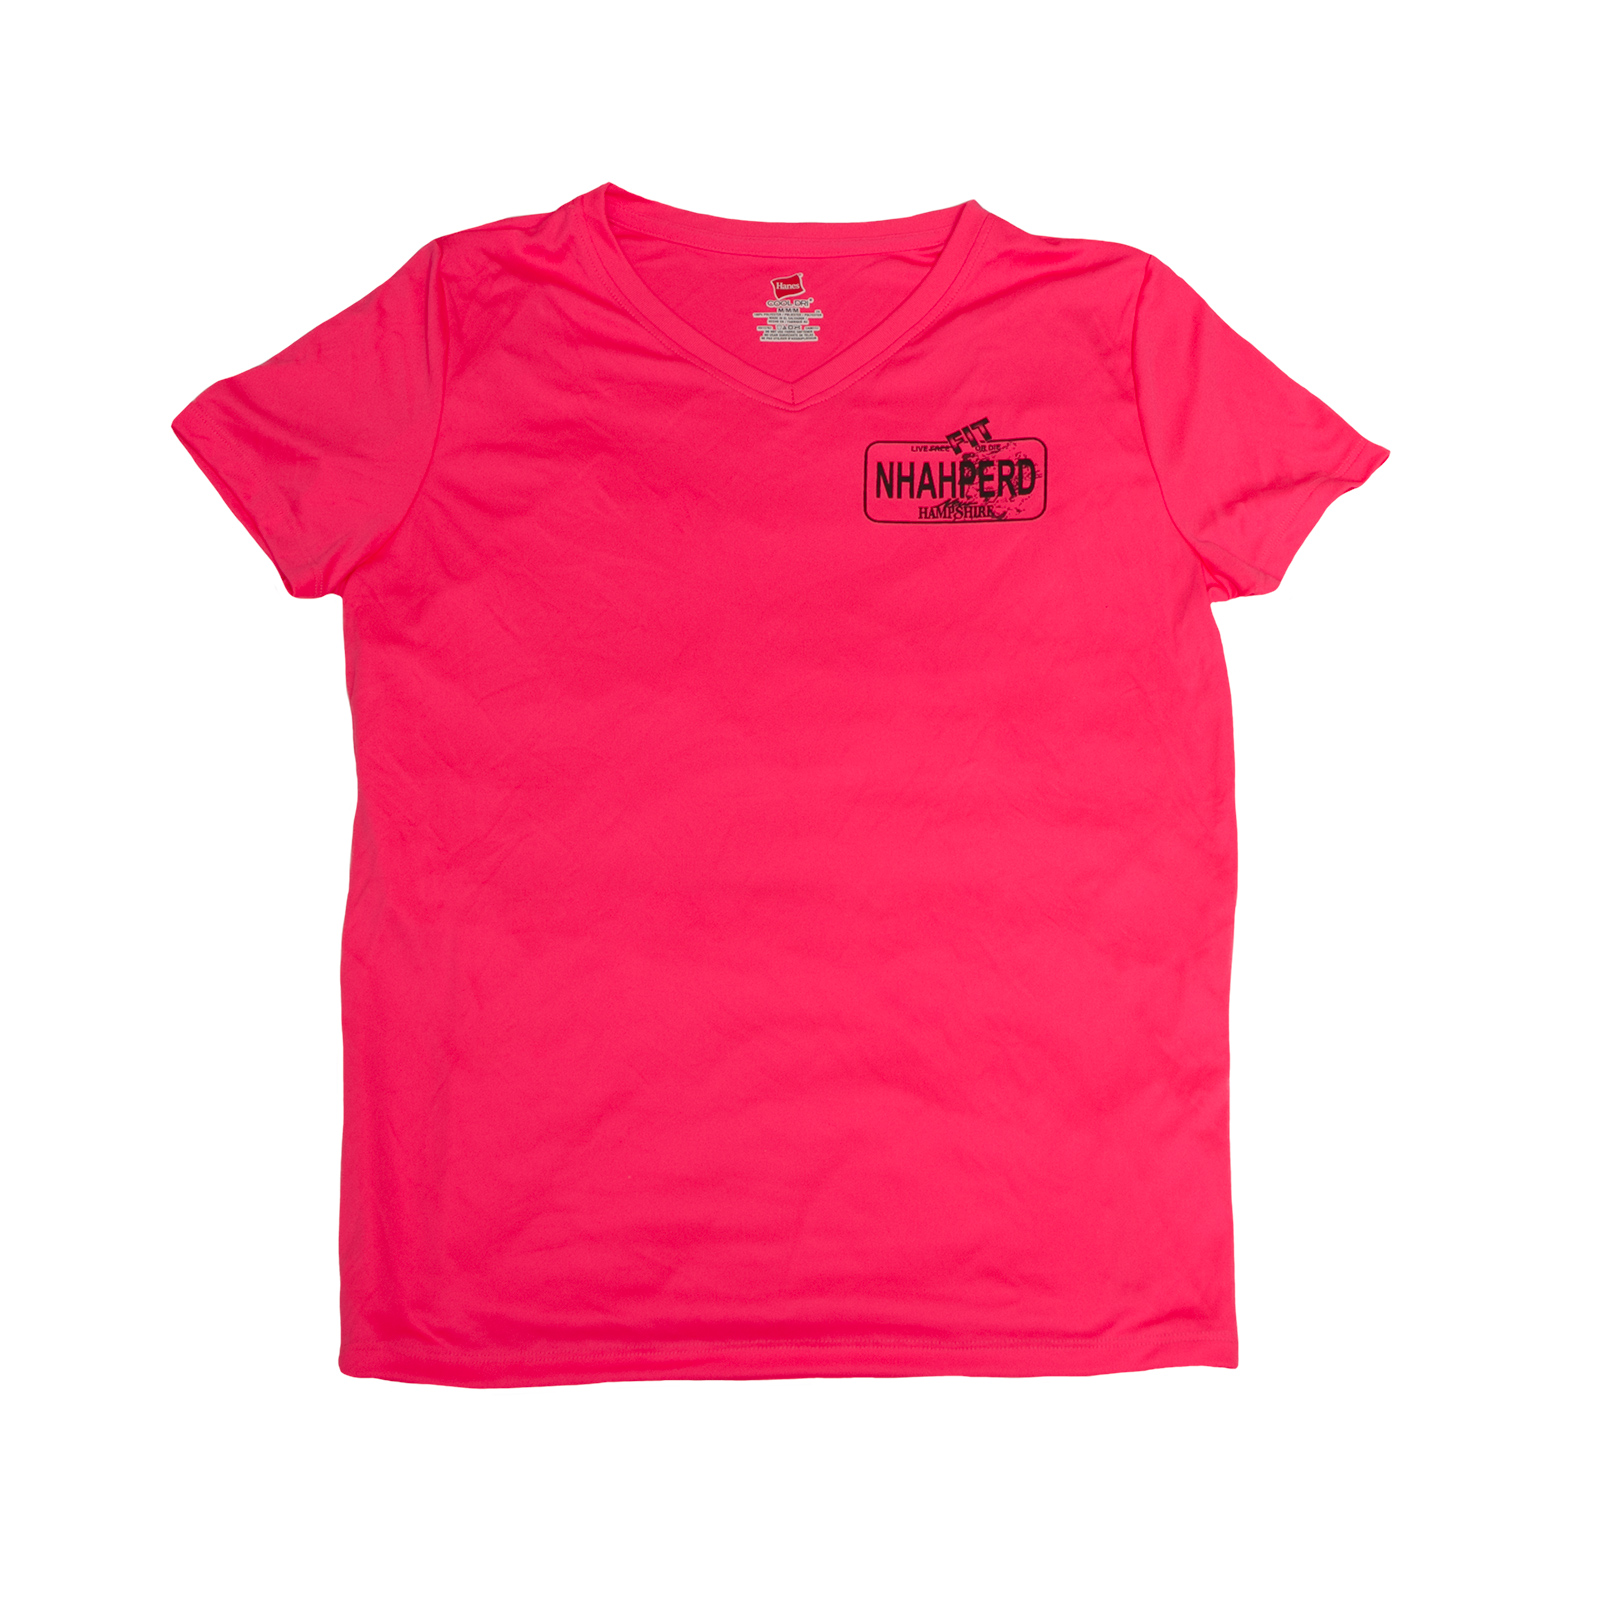 neon pink dri fit shirt